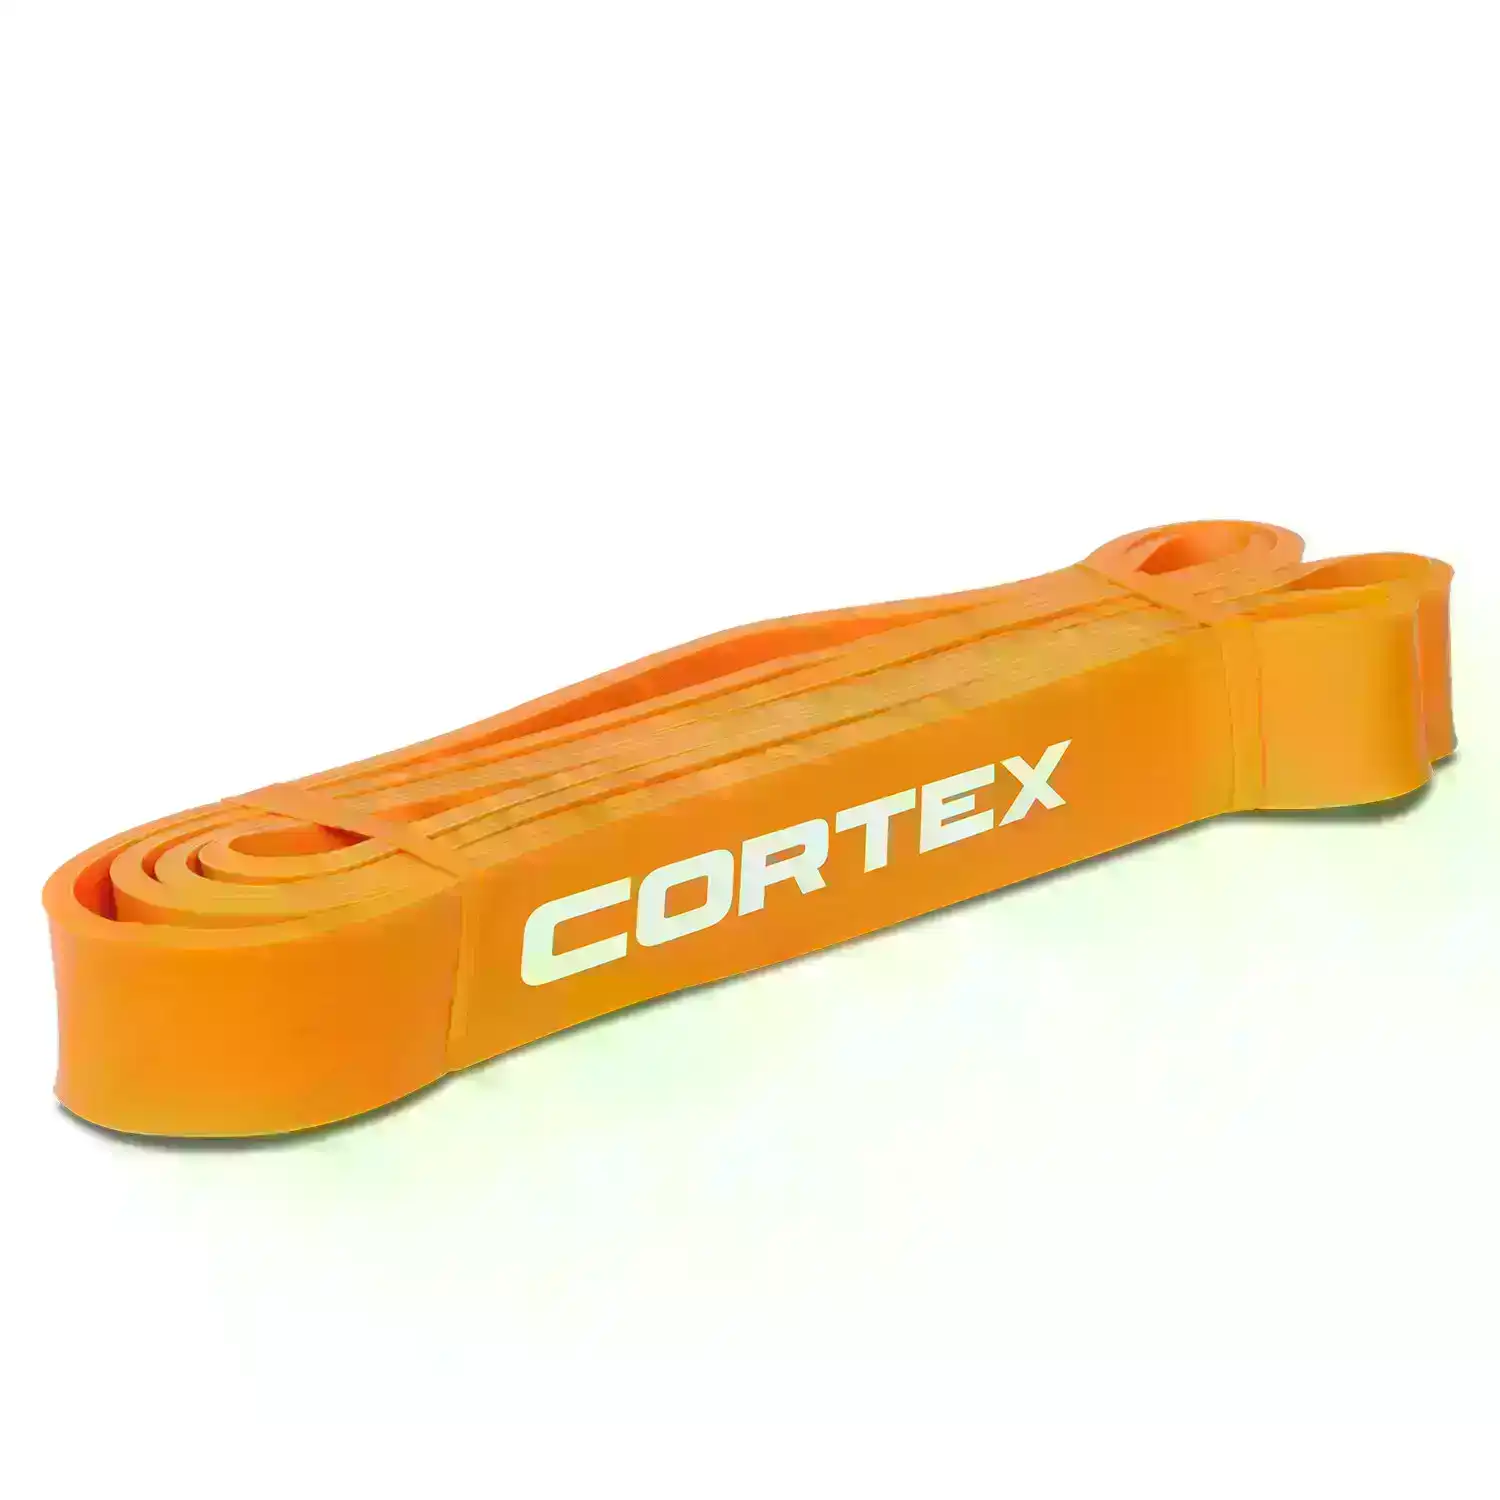 Cortex Resistance Band 32mm